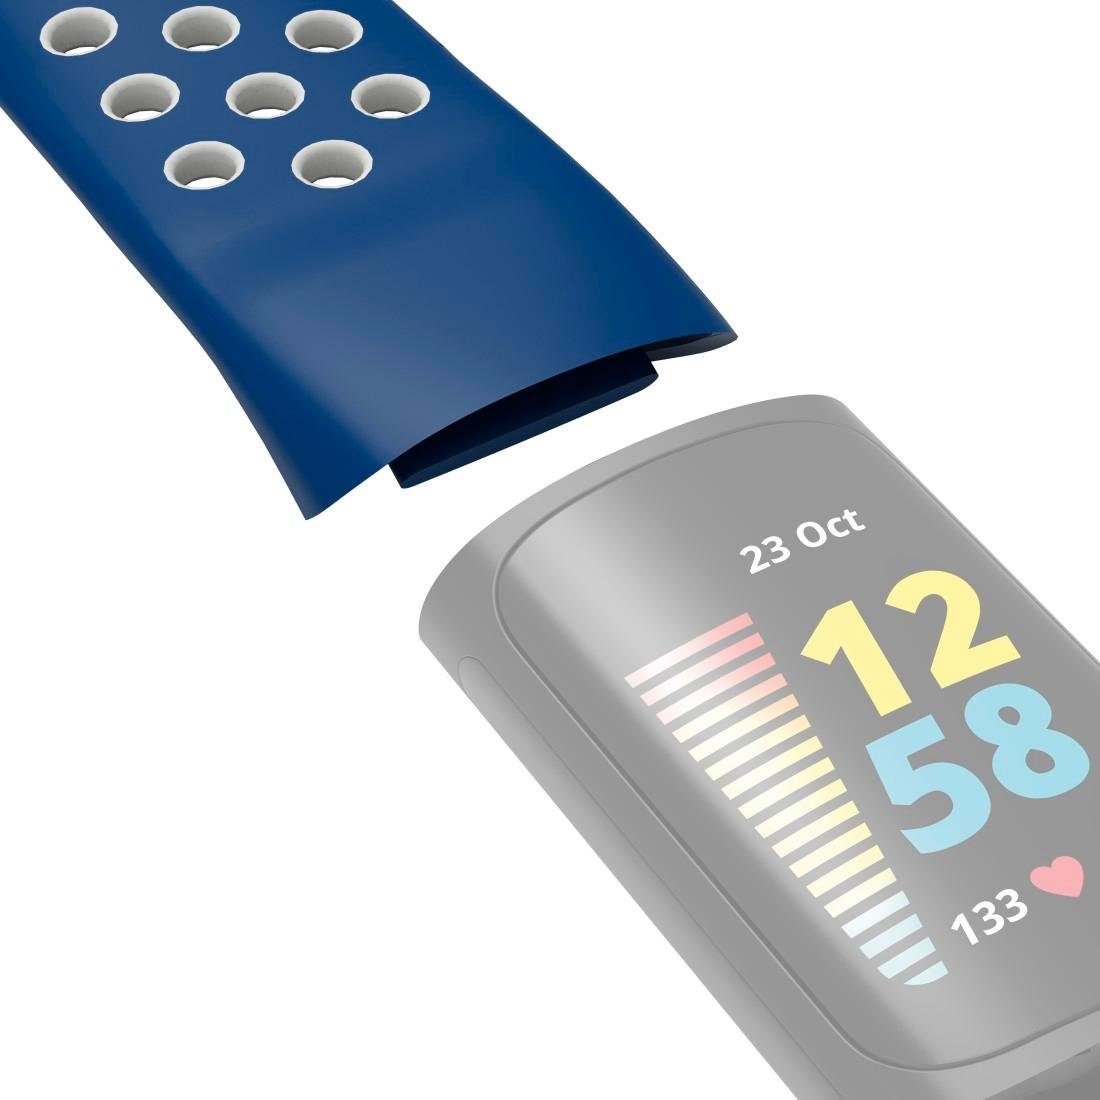 Sportarmband dunkelblau für Smartwatch-Armband Hama 5, Charge Uhrenarmband atmungsaktives Fitbit